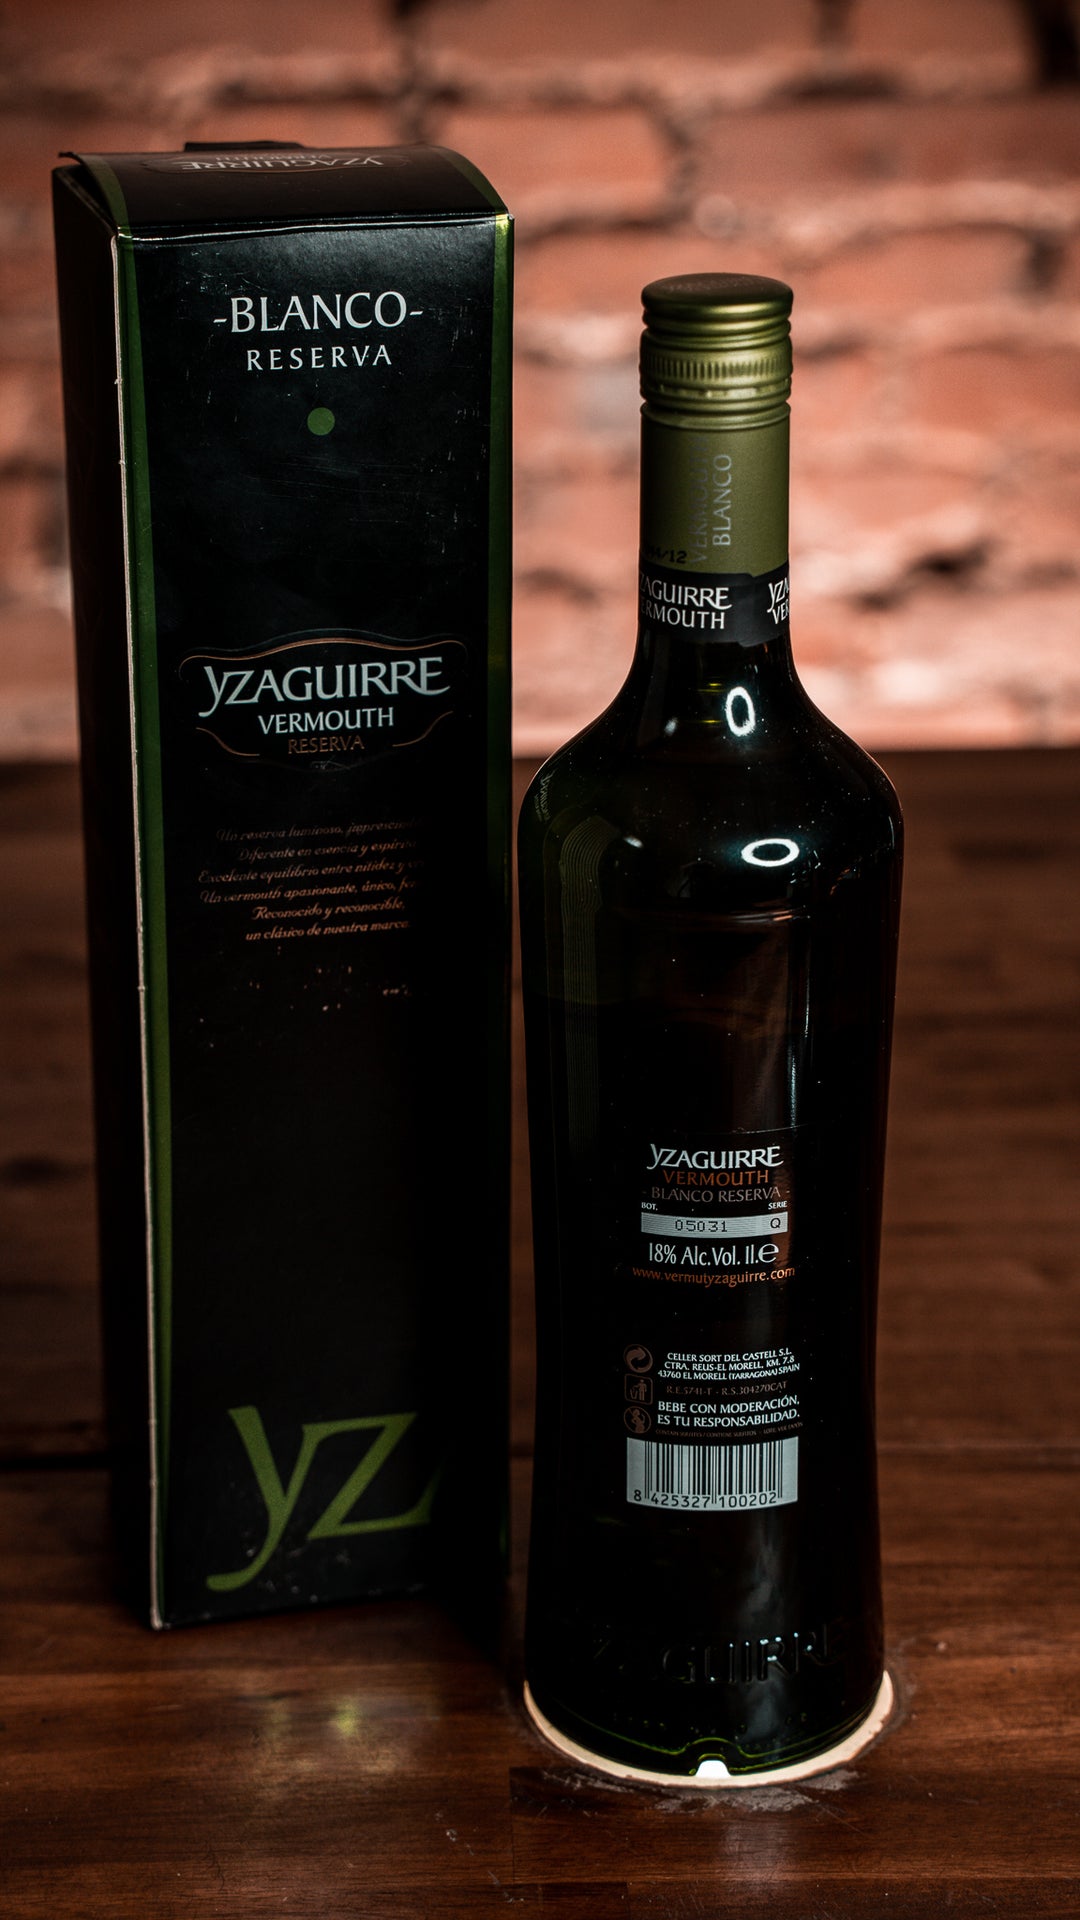 Yzaguirre Blanco Vermouth 15% 1l - Spirituosengalerie